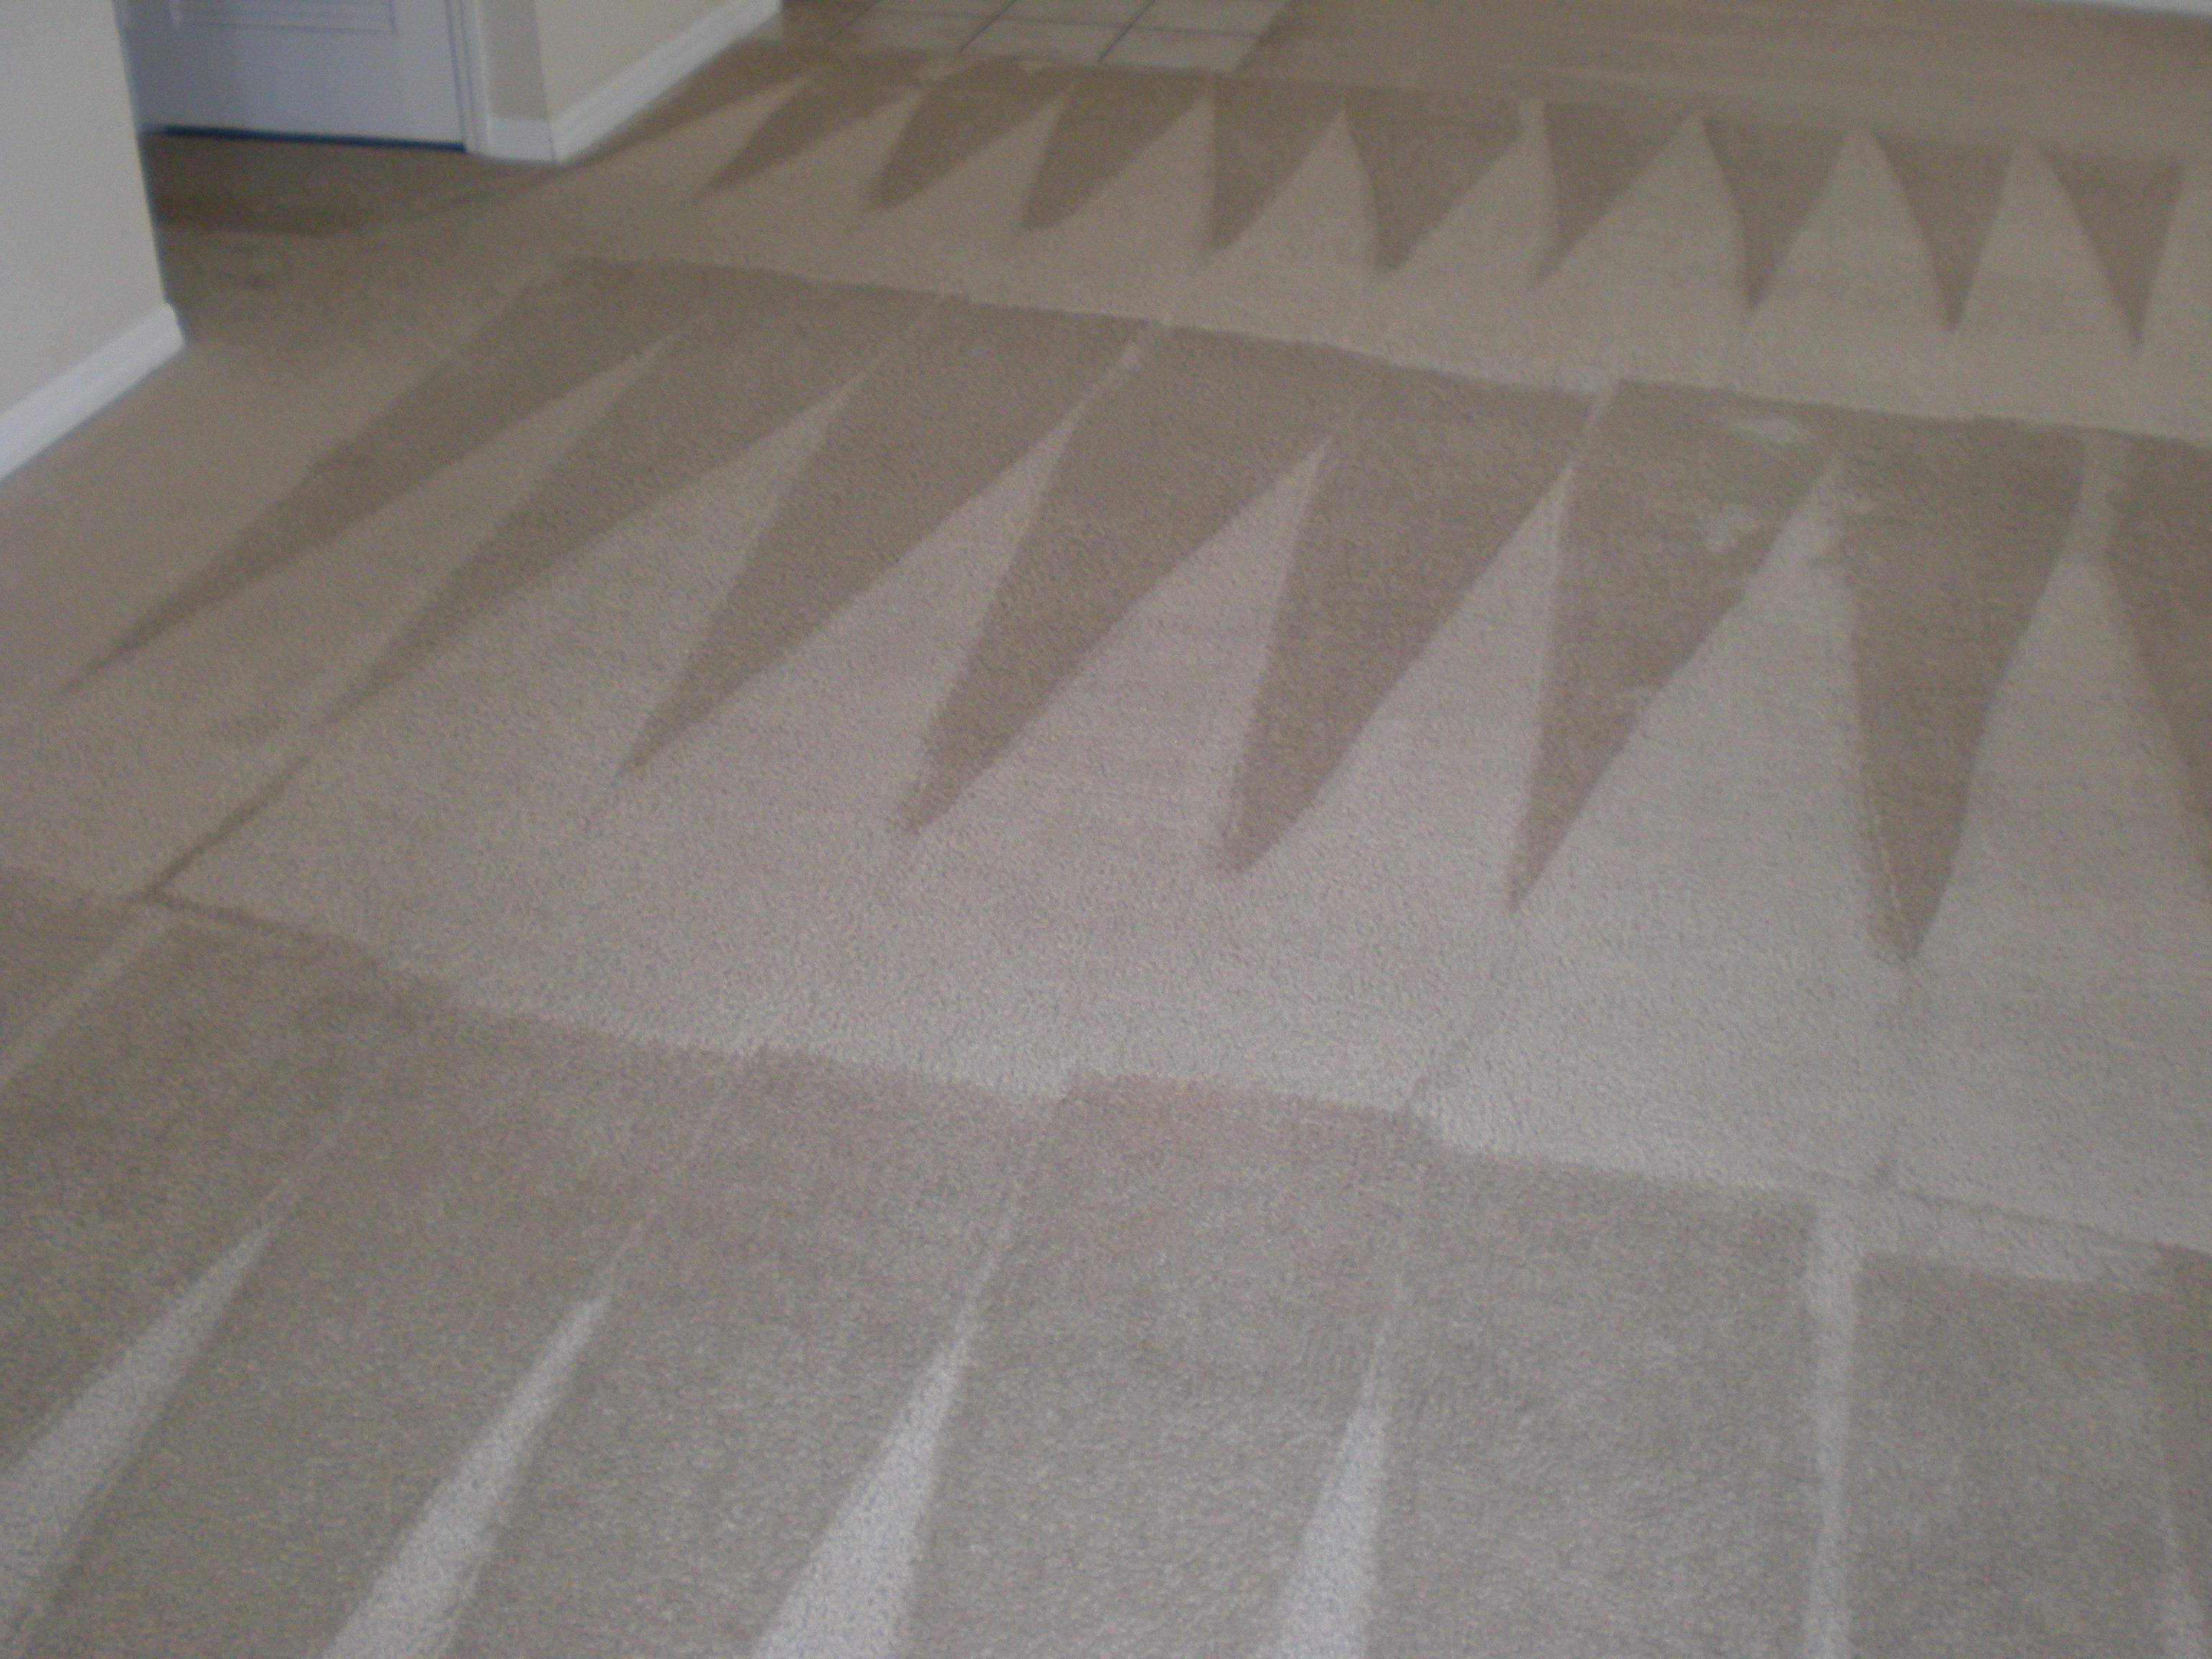 eco-friendly carpet cleaning san antonio tx